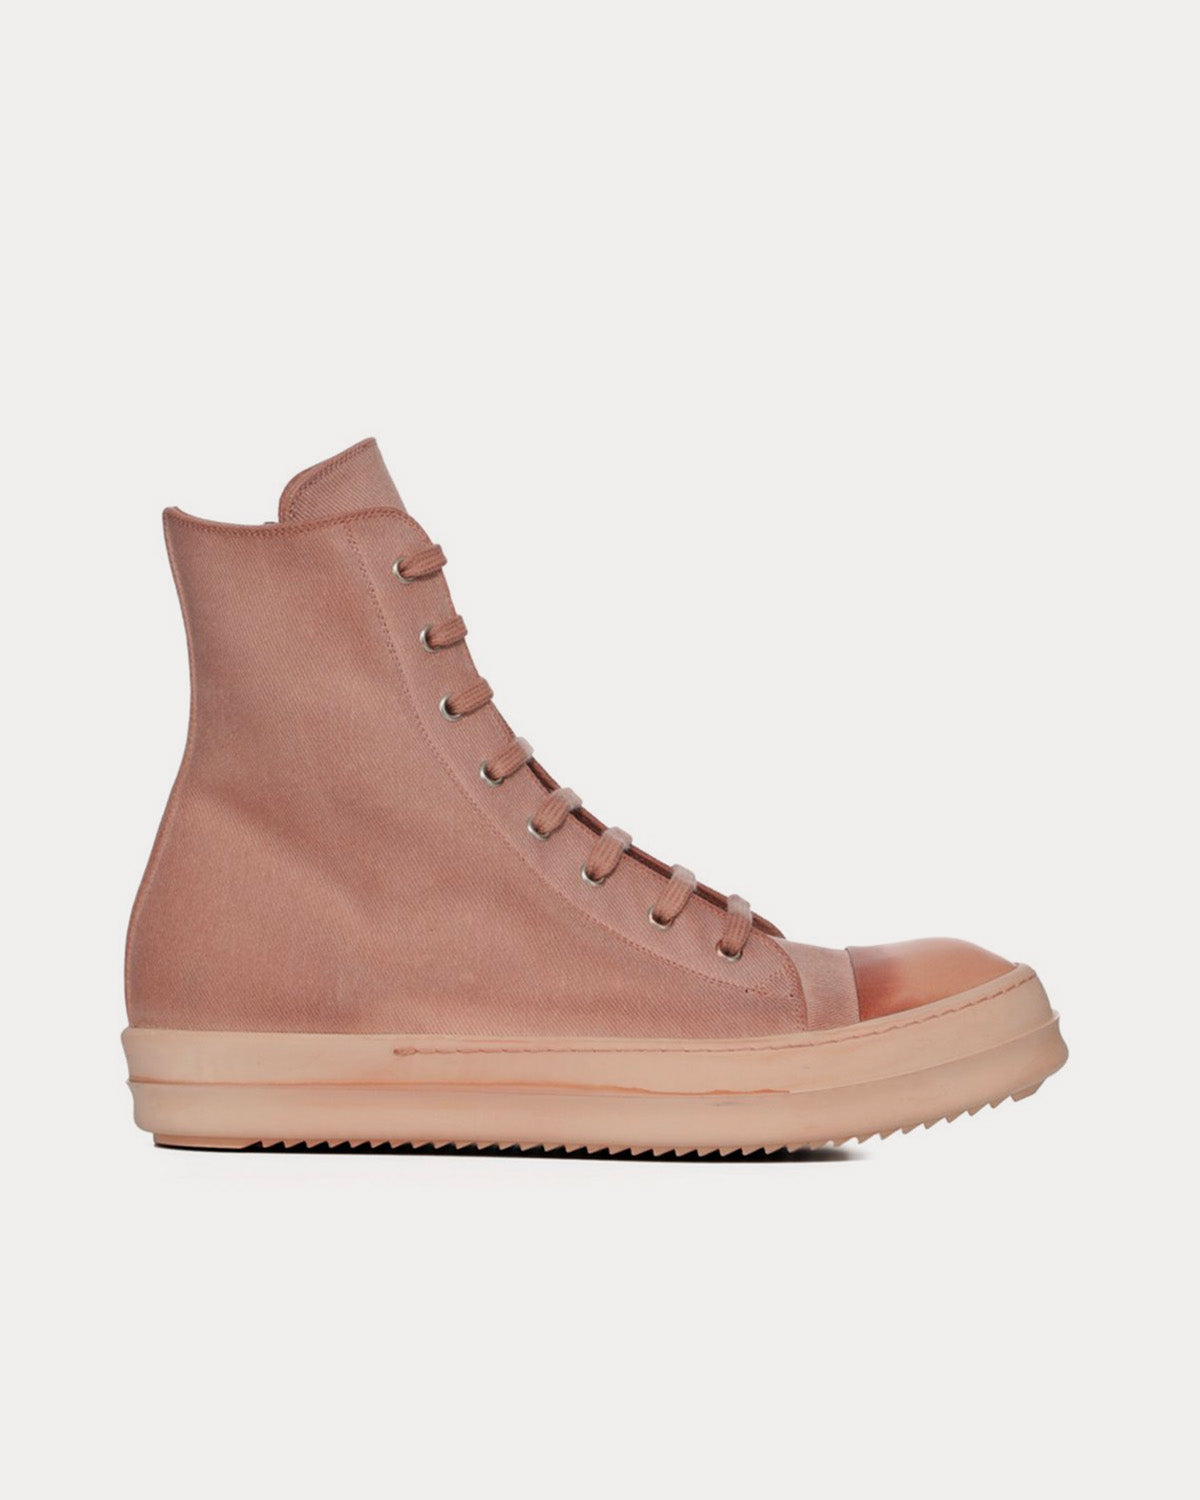 Denim Faded Pink High Top Sneakers